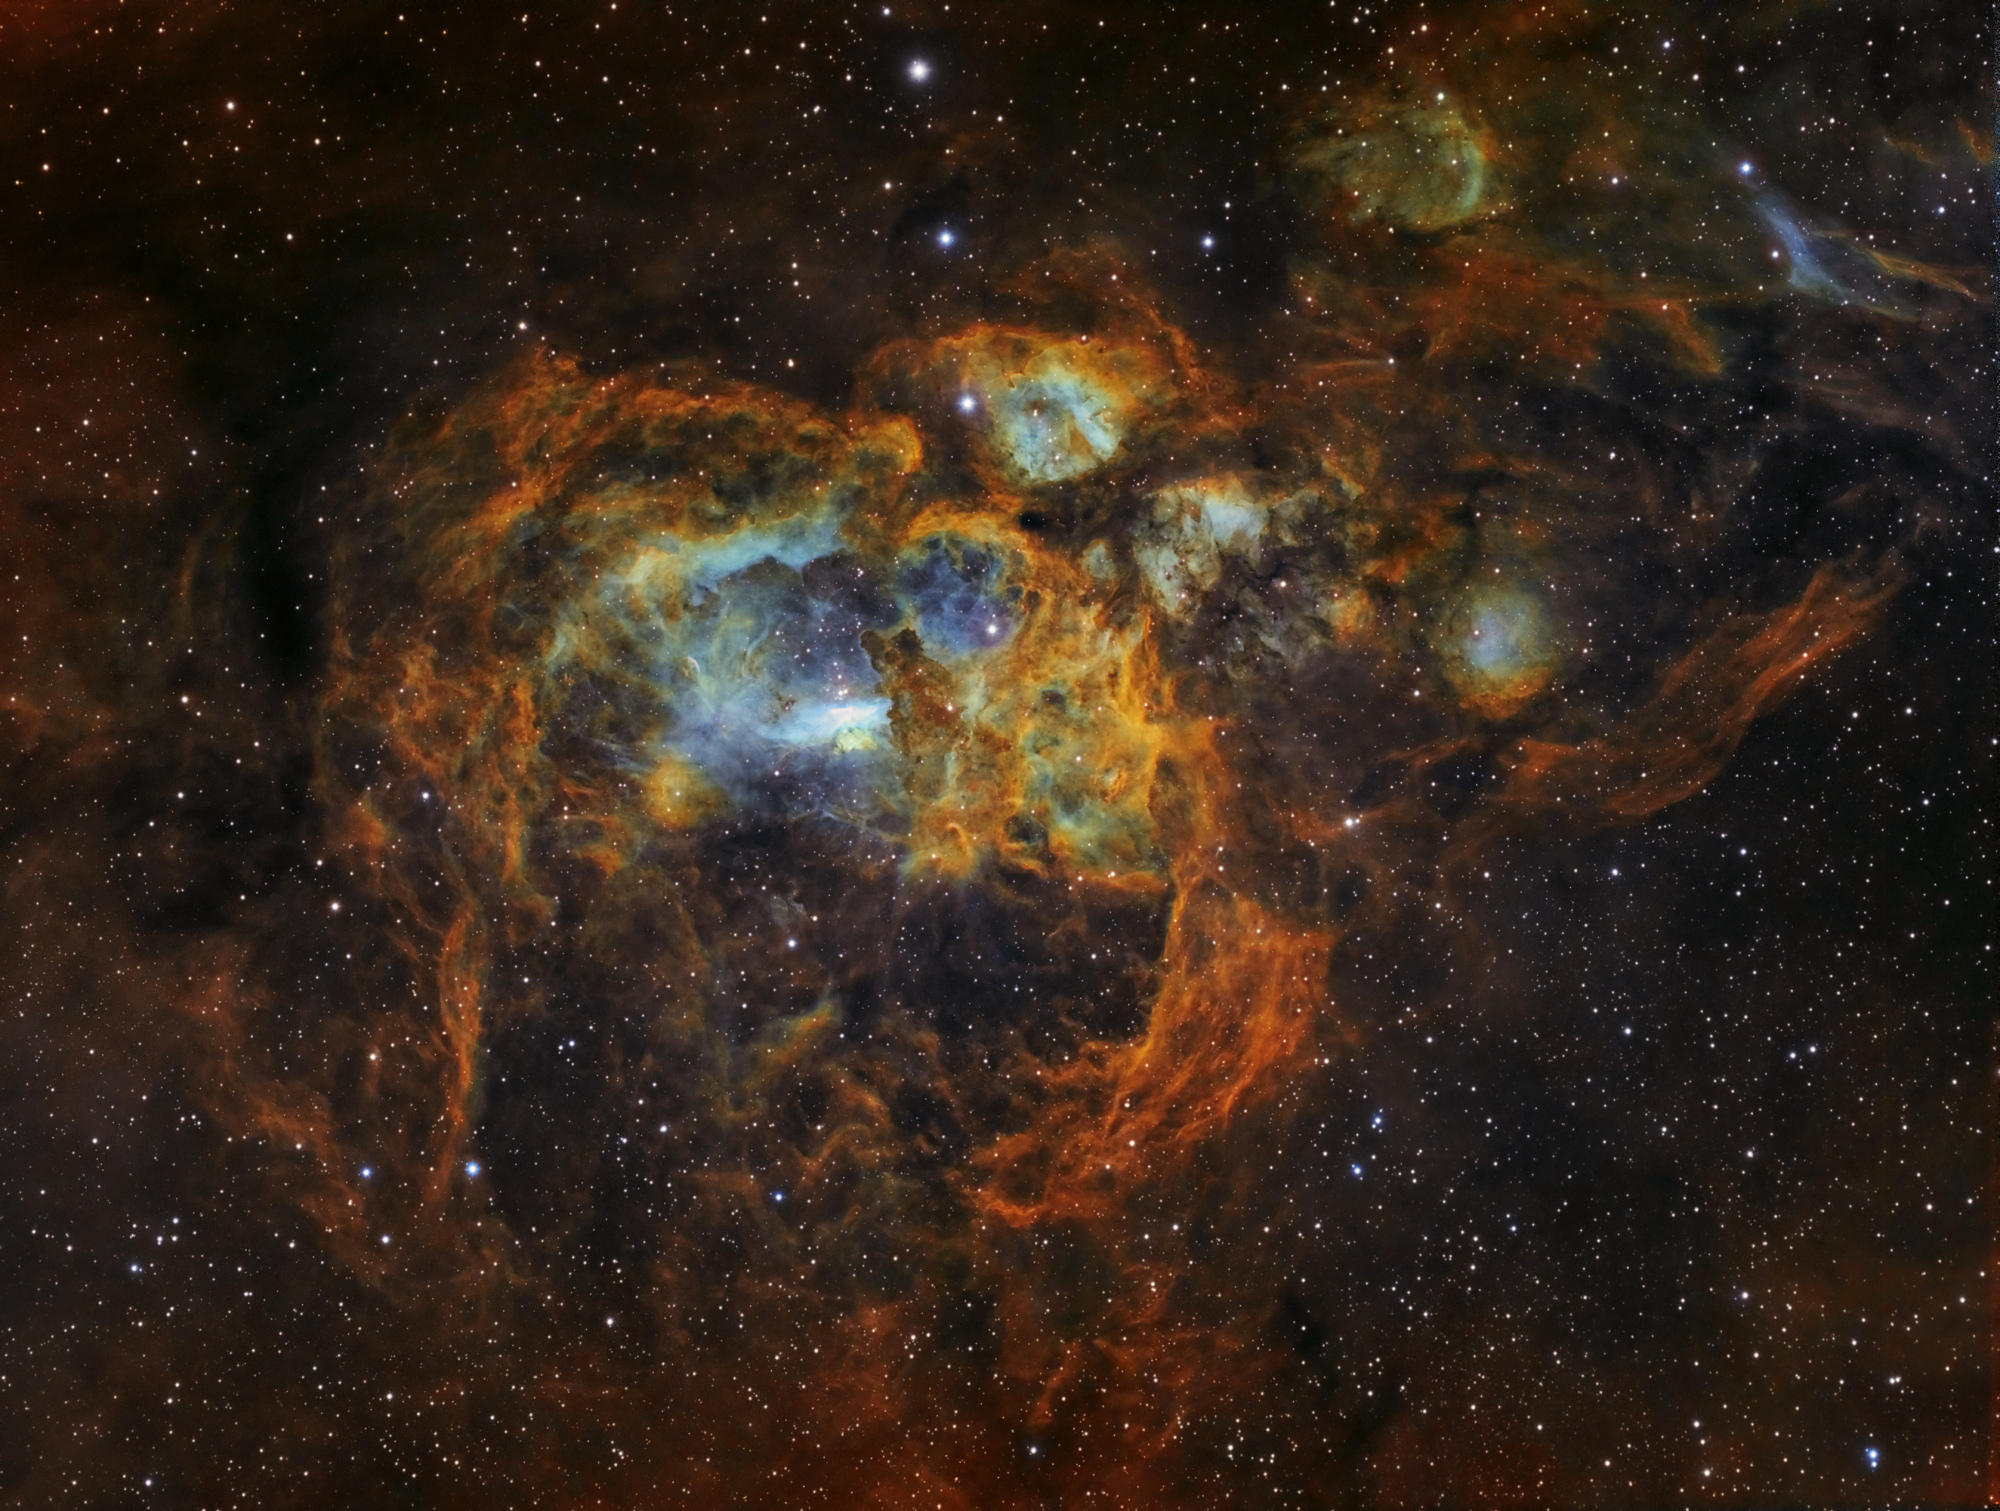 62abe41047817_NGC6357-tunedcolorcopy.thumb.jpg.b3c620bffa34a7e4df500c8a41c841a3.jpg